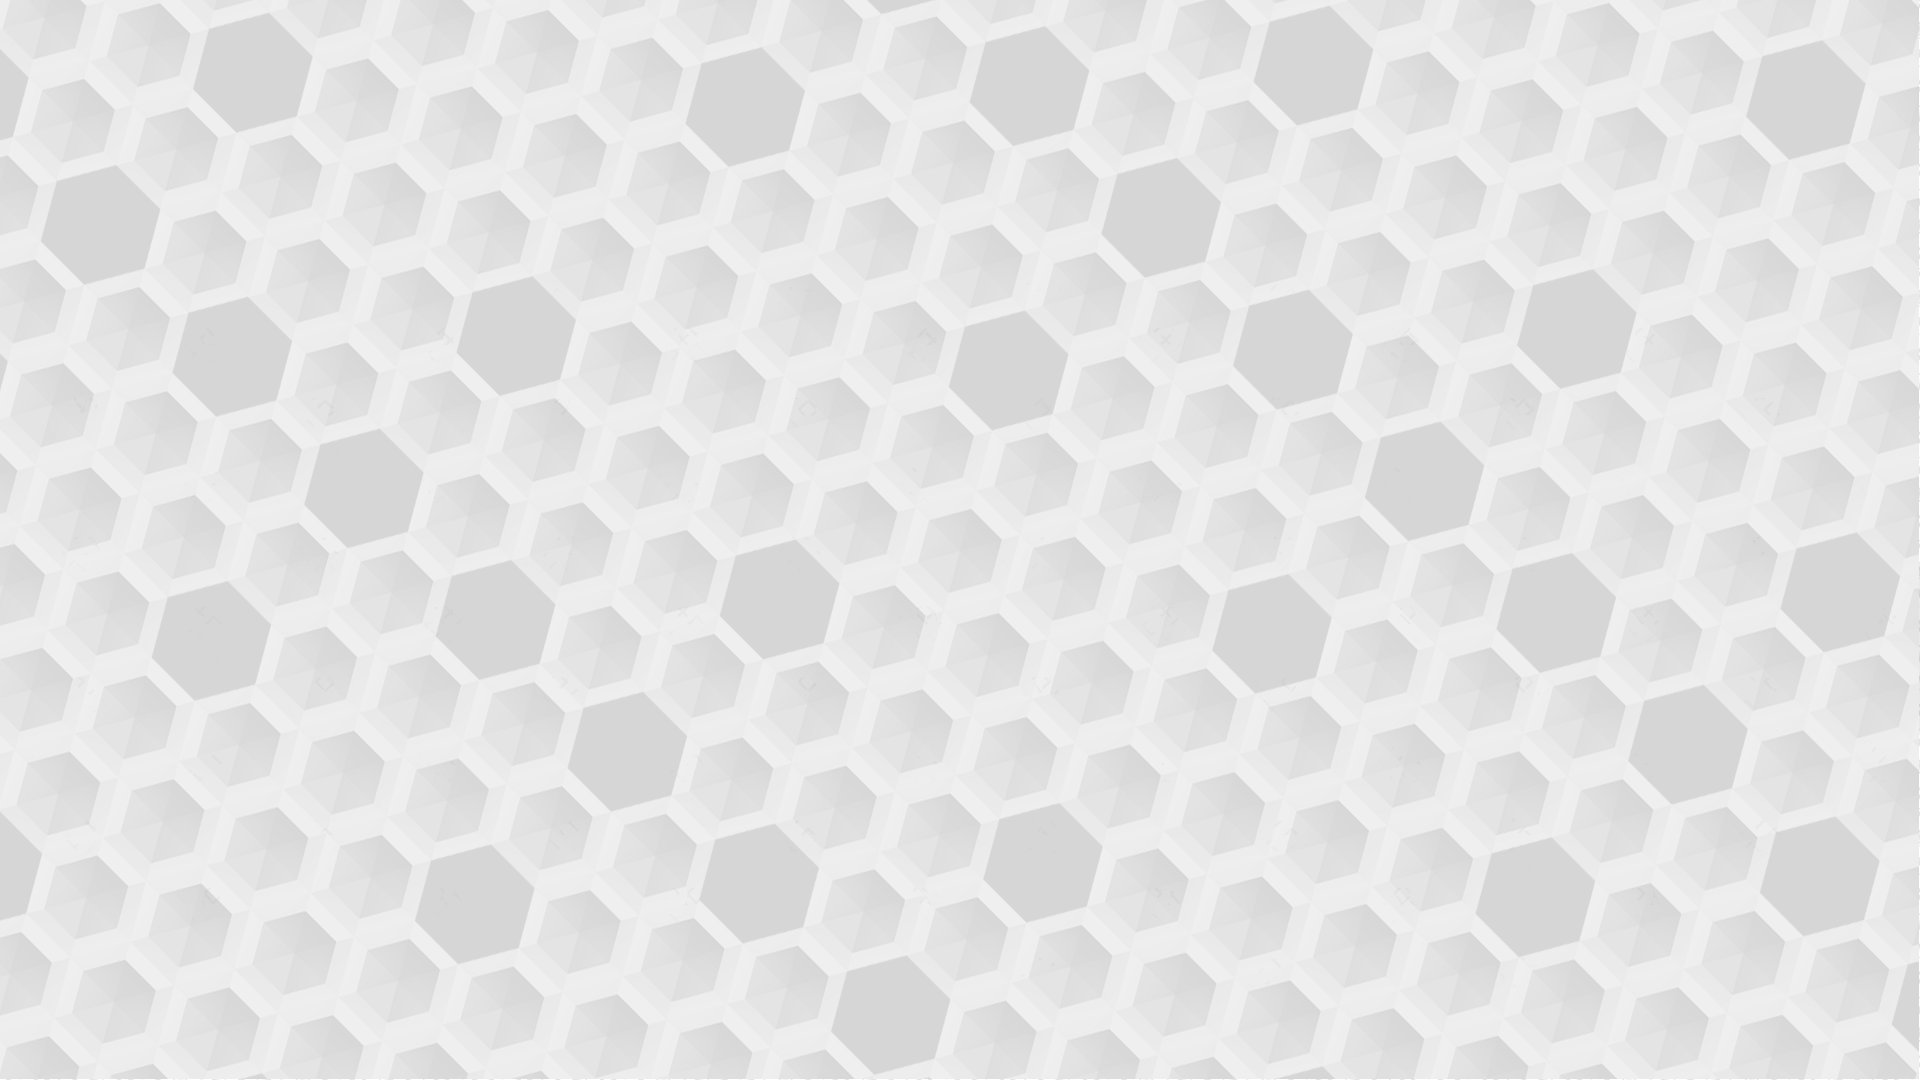 General 1920x1080 hive honeycombs hexagon bright white minimalism geometric figures texture digital art